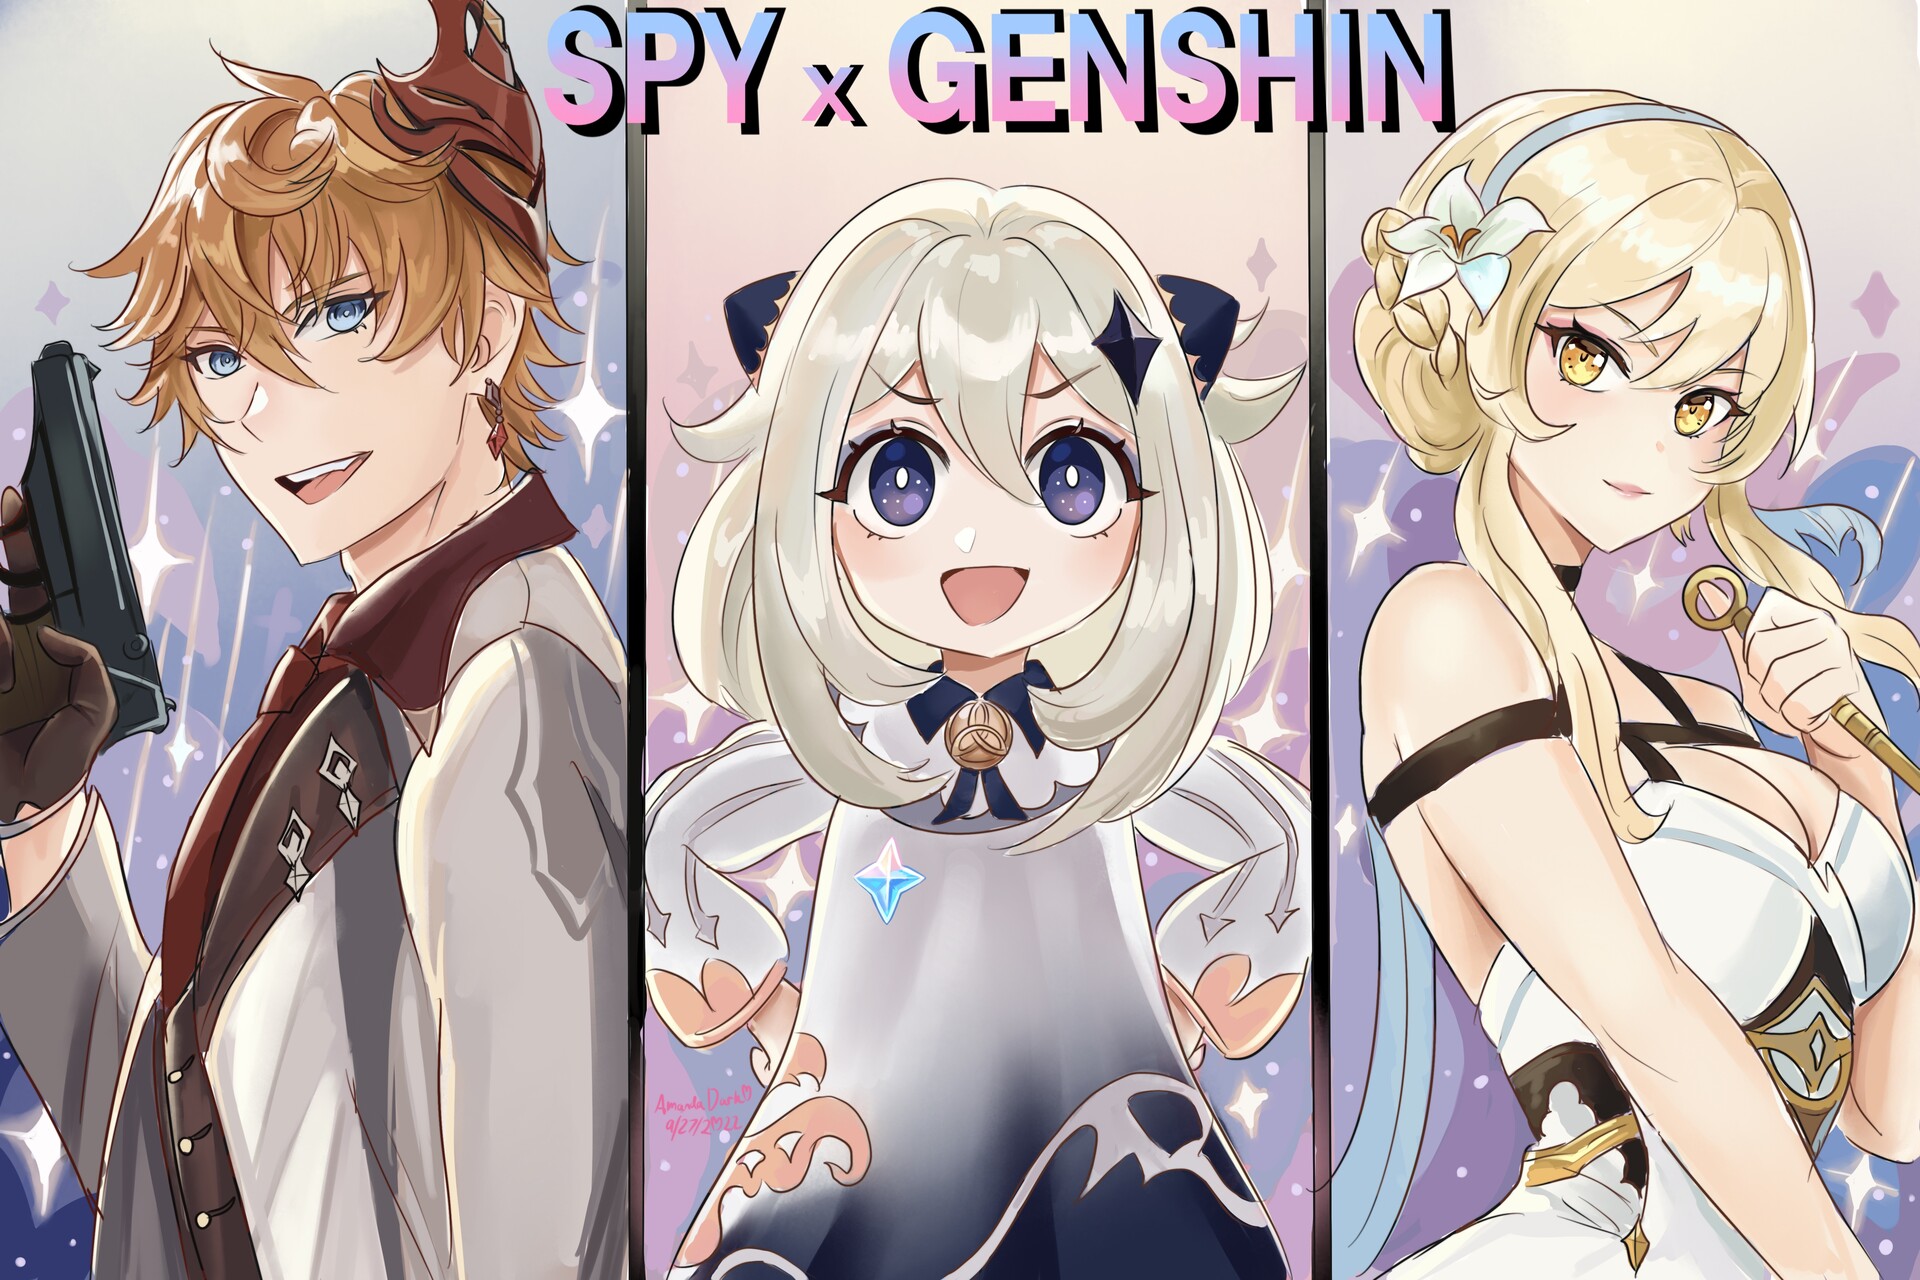 Spy x Family x Genshin Impact?